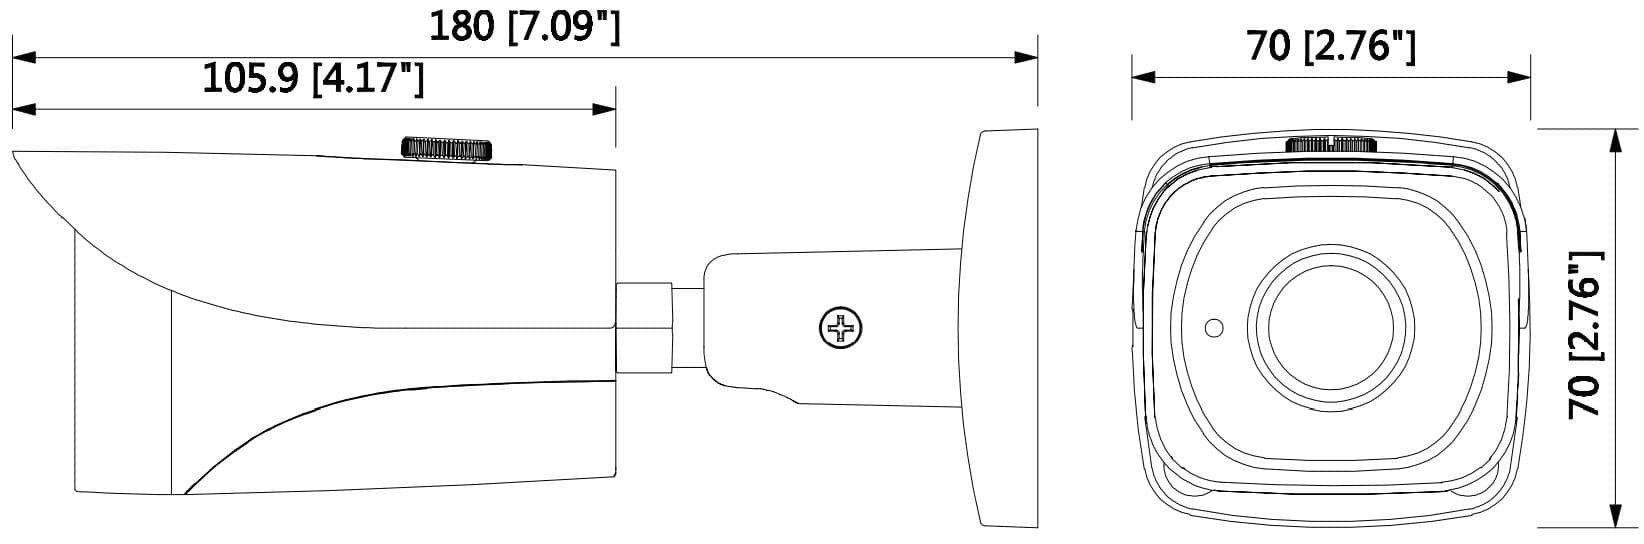 tube-dahua-4mp-hdcvi-schema